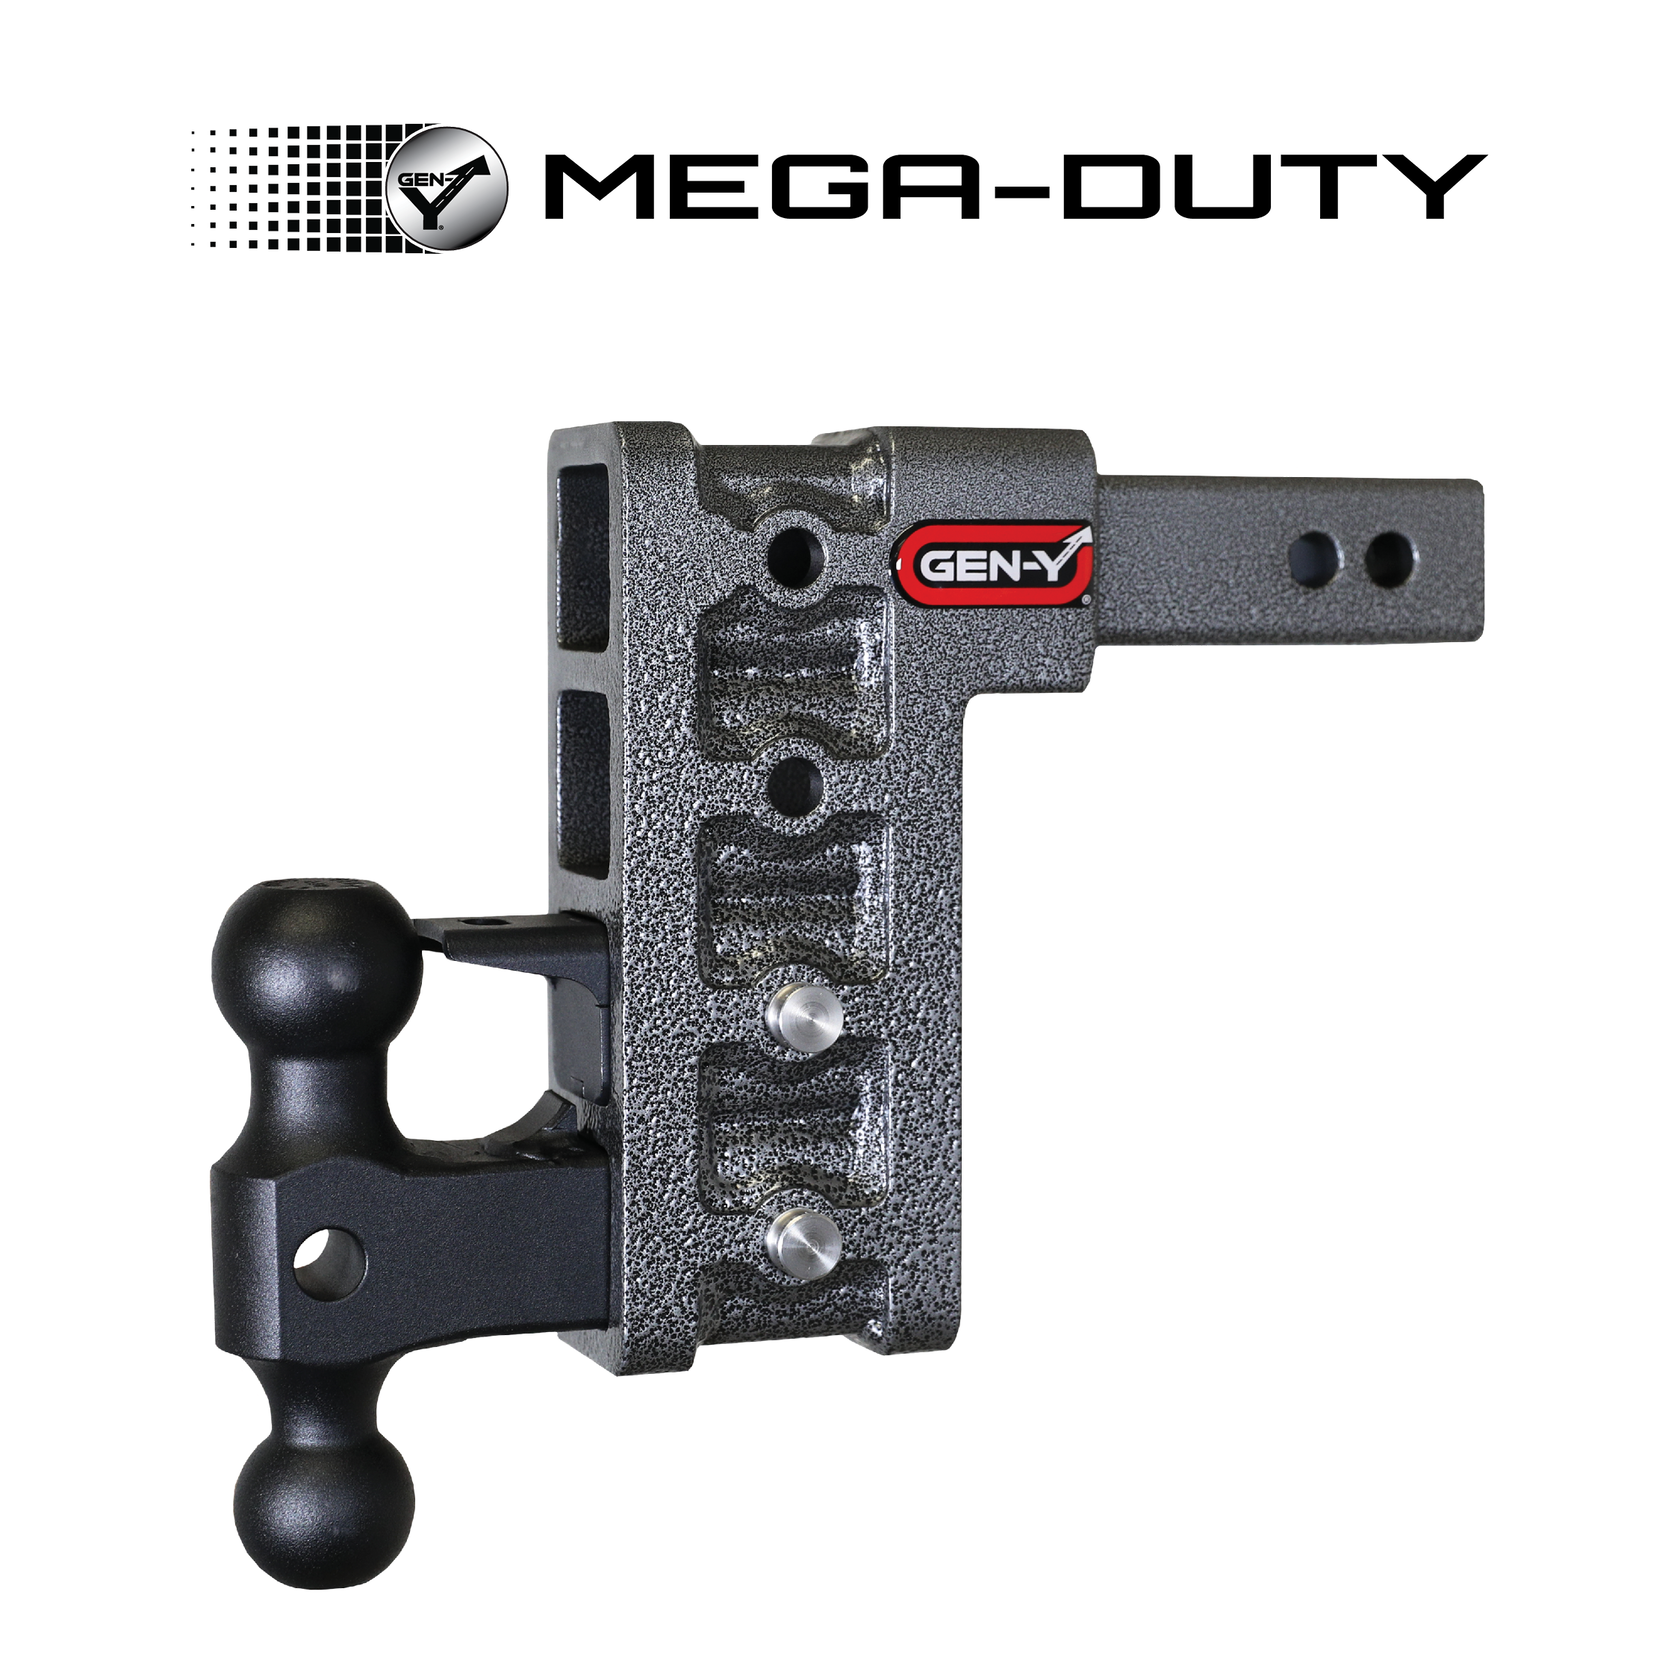 Mega-Duty 2 Drop Hitch  16K Adjustable Ball Mount - GEN-Y HITCH